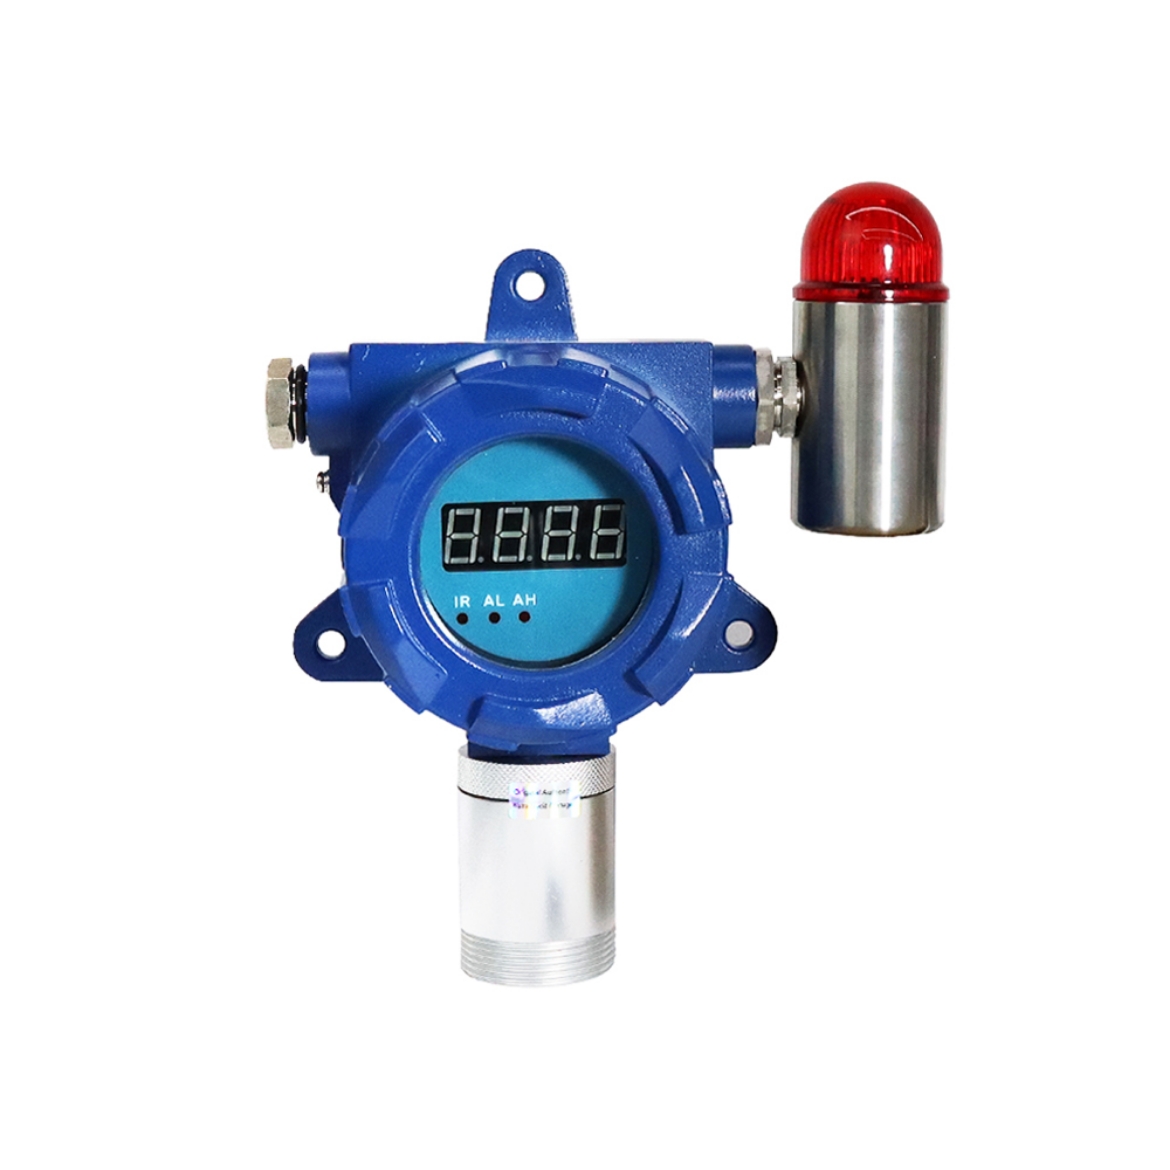 Fixed Benzene (C6H6) Gas Detector